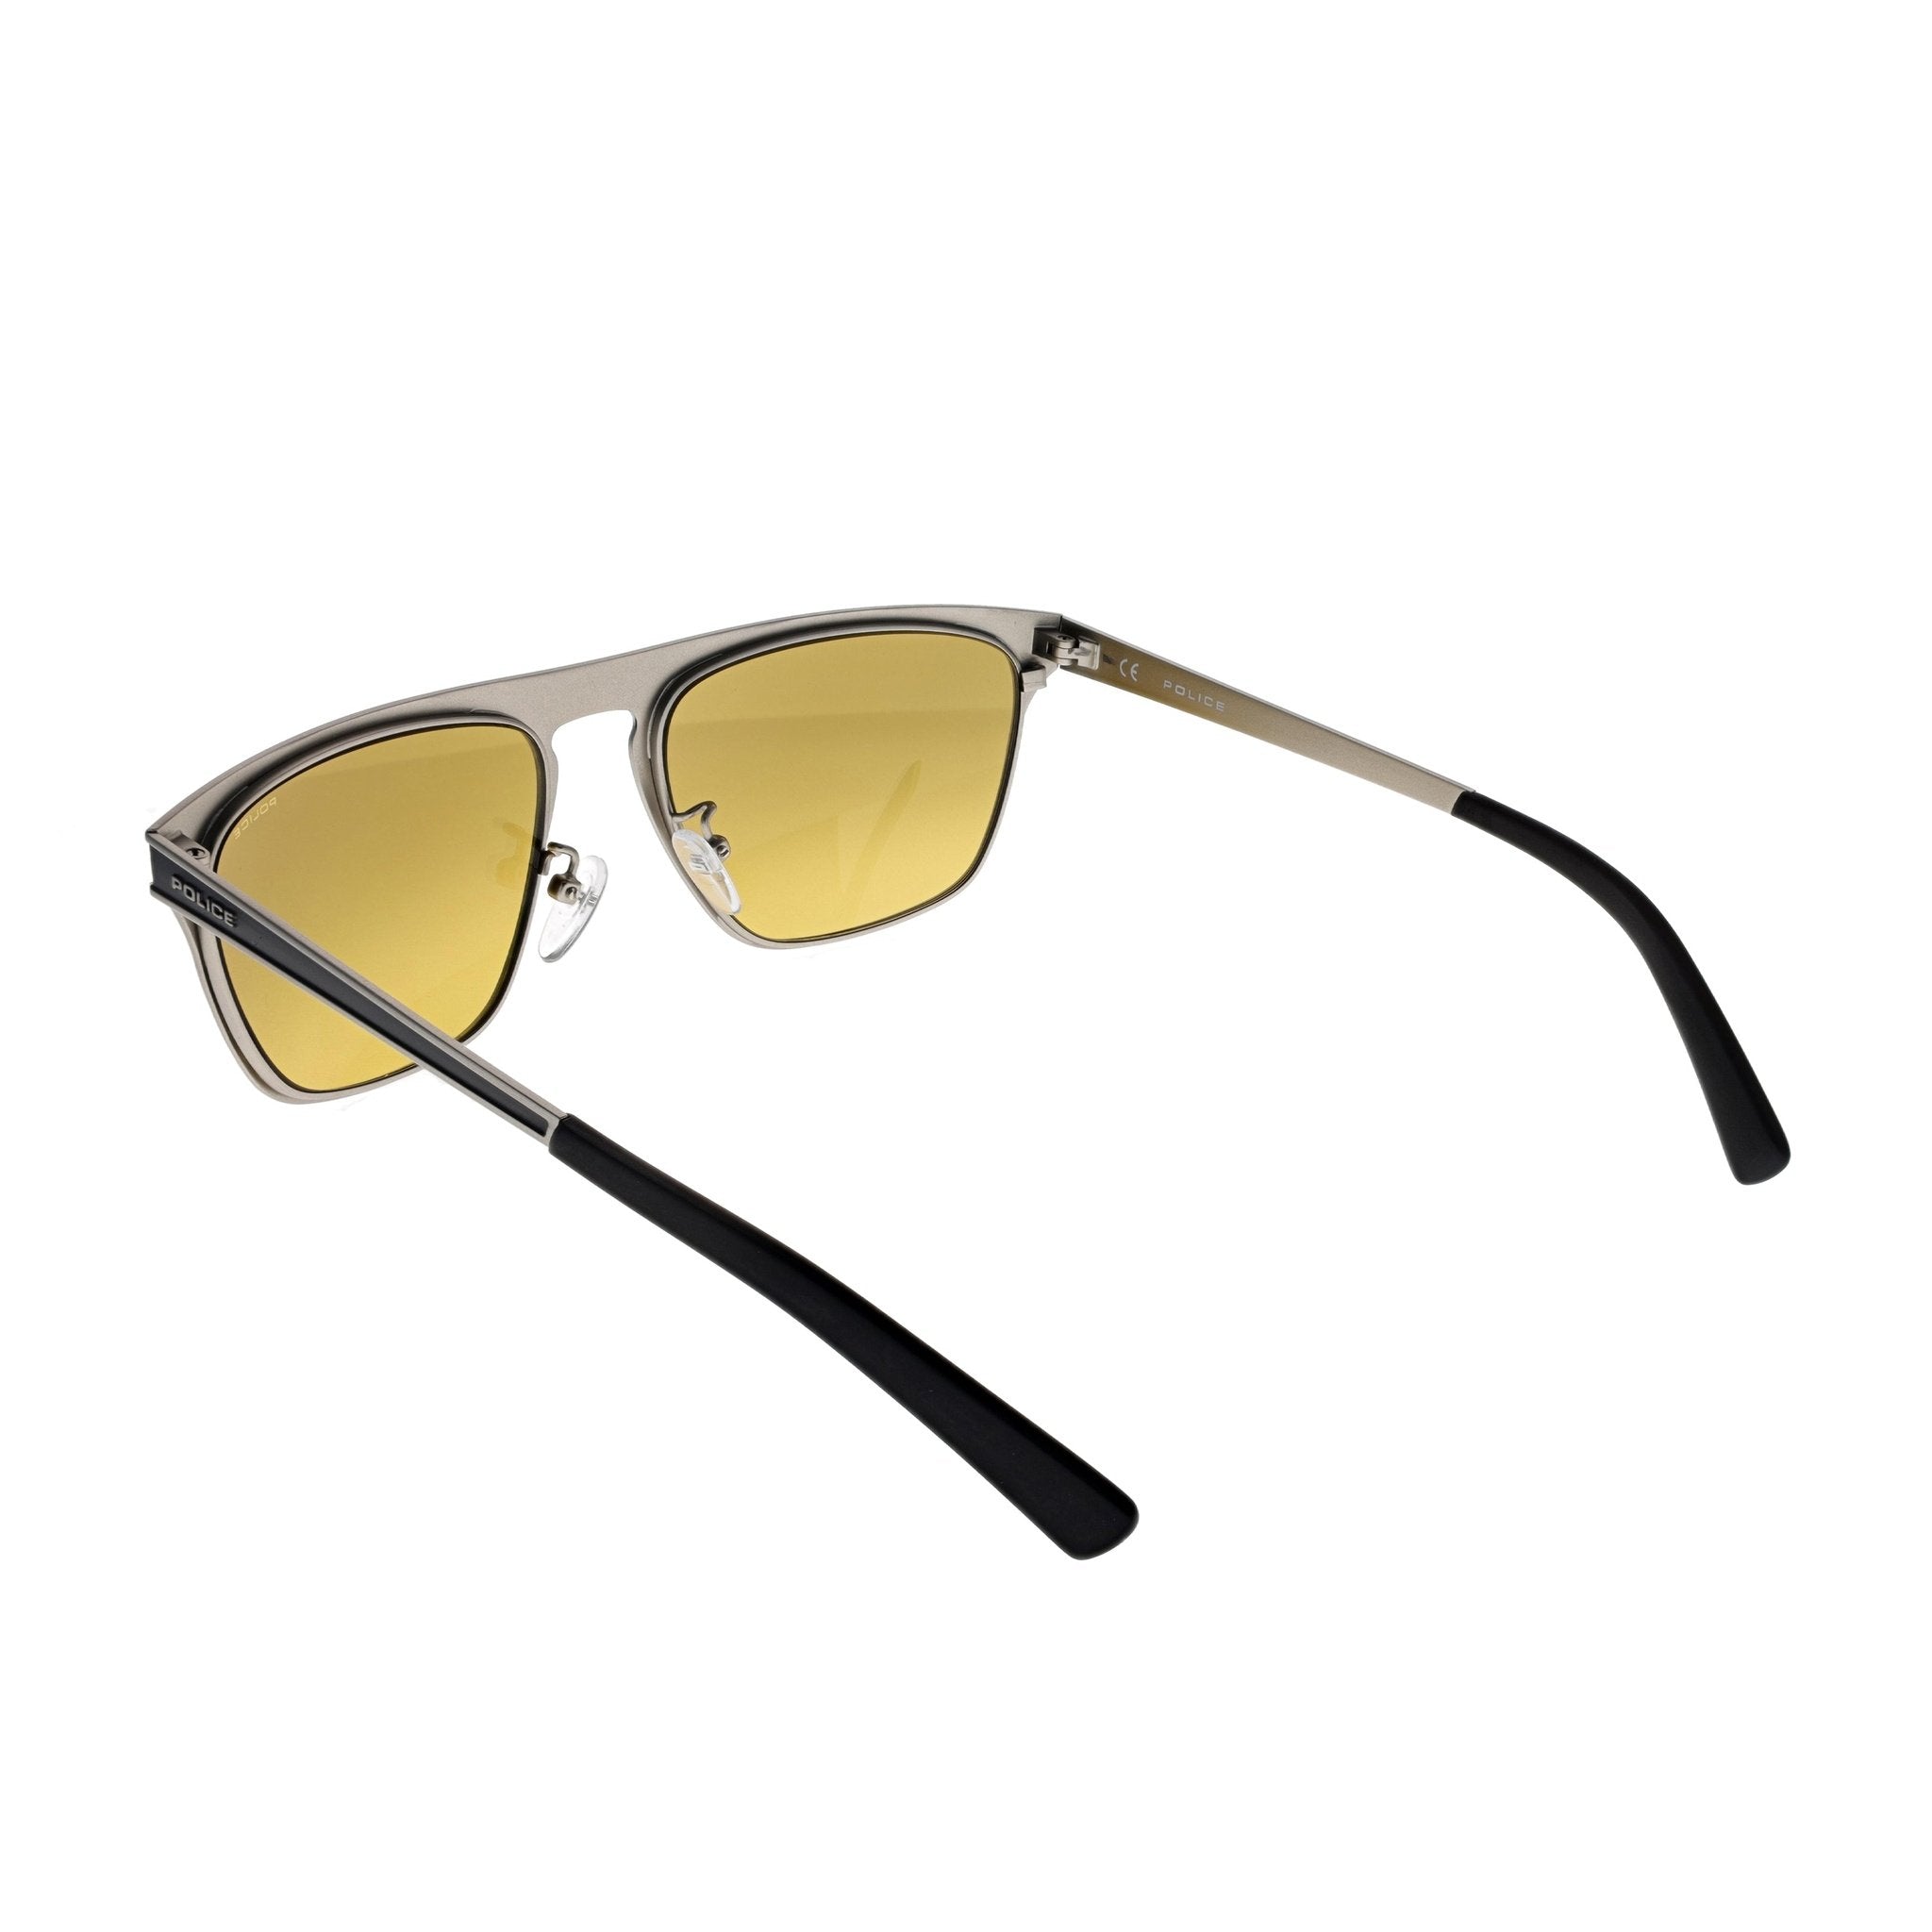 Police Sunglasses - S8978-W01X